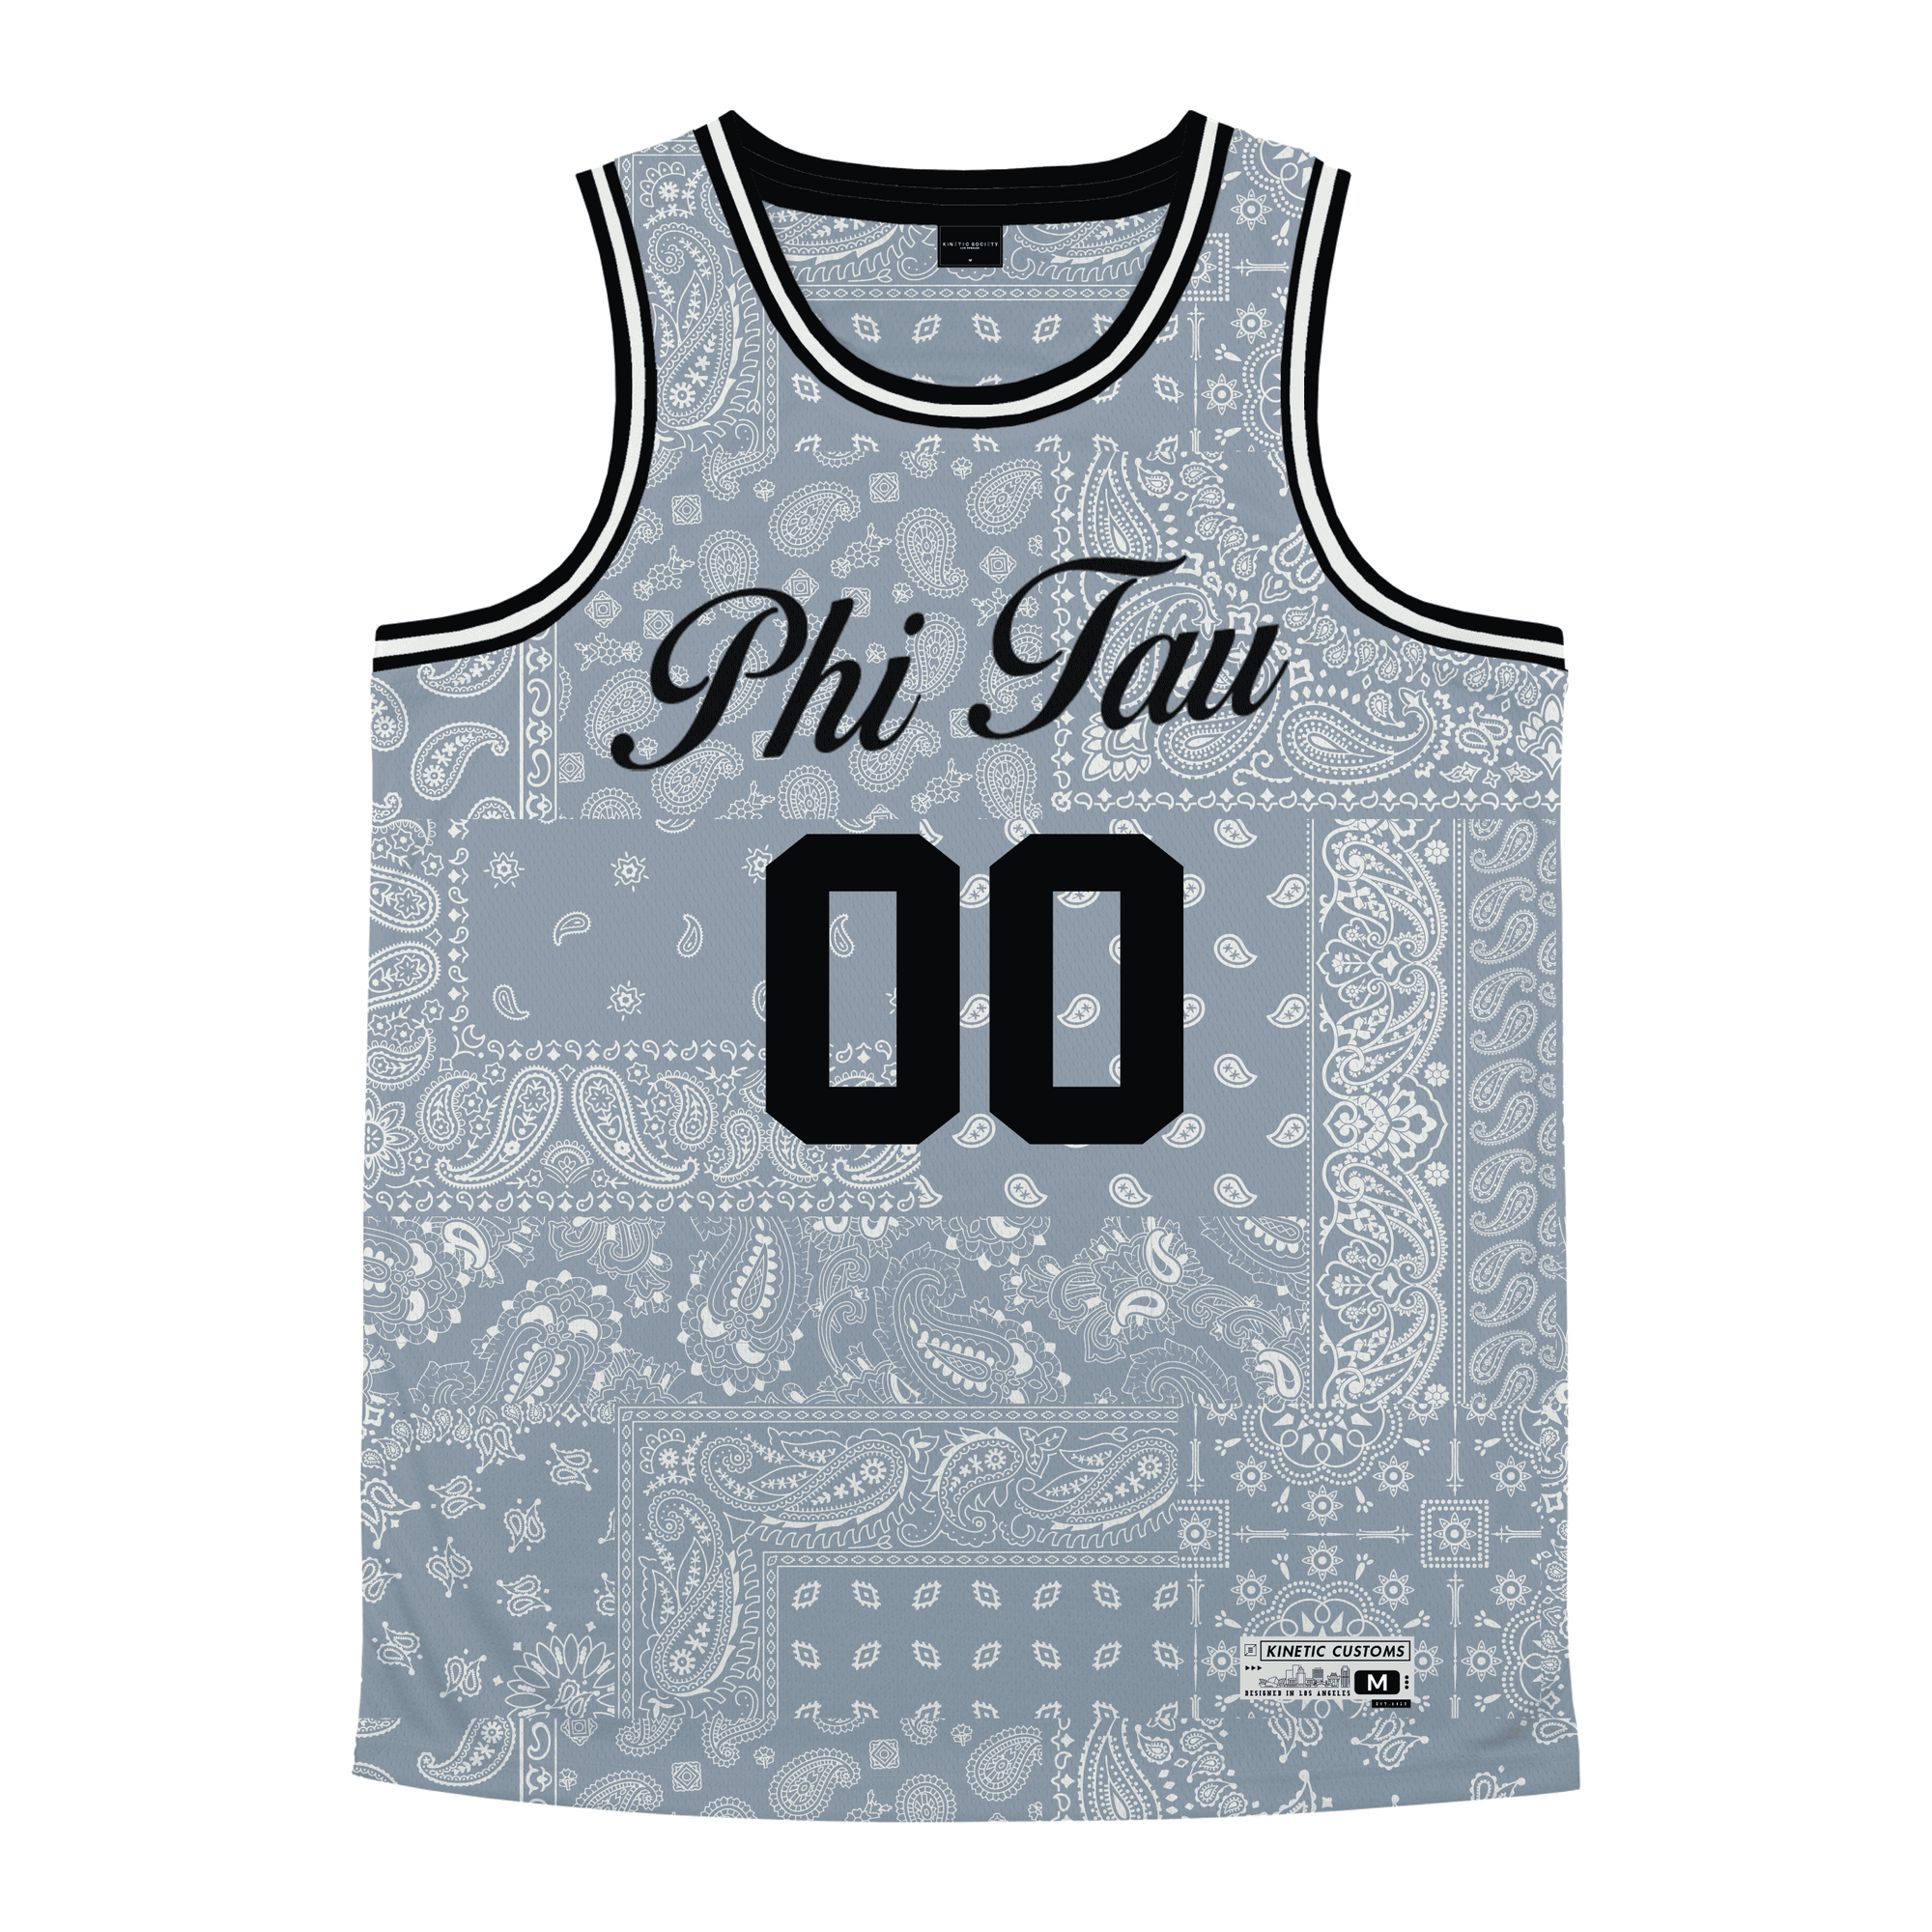 Phi Kappa Tau - Slate Bandana - Basketball Jersey